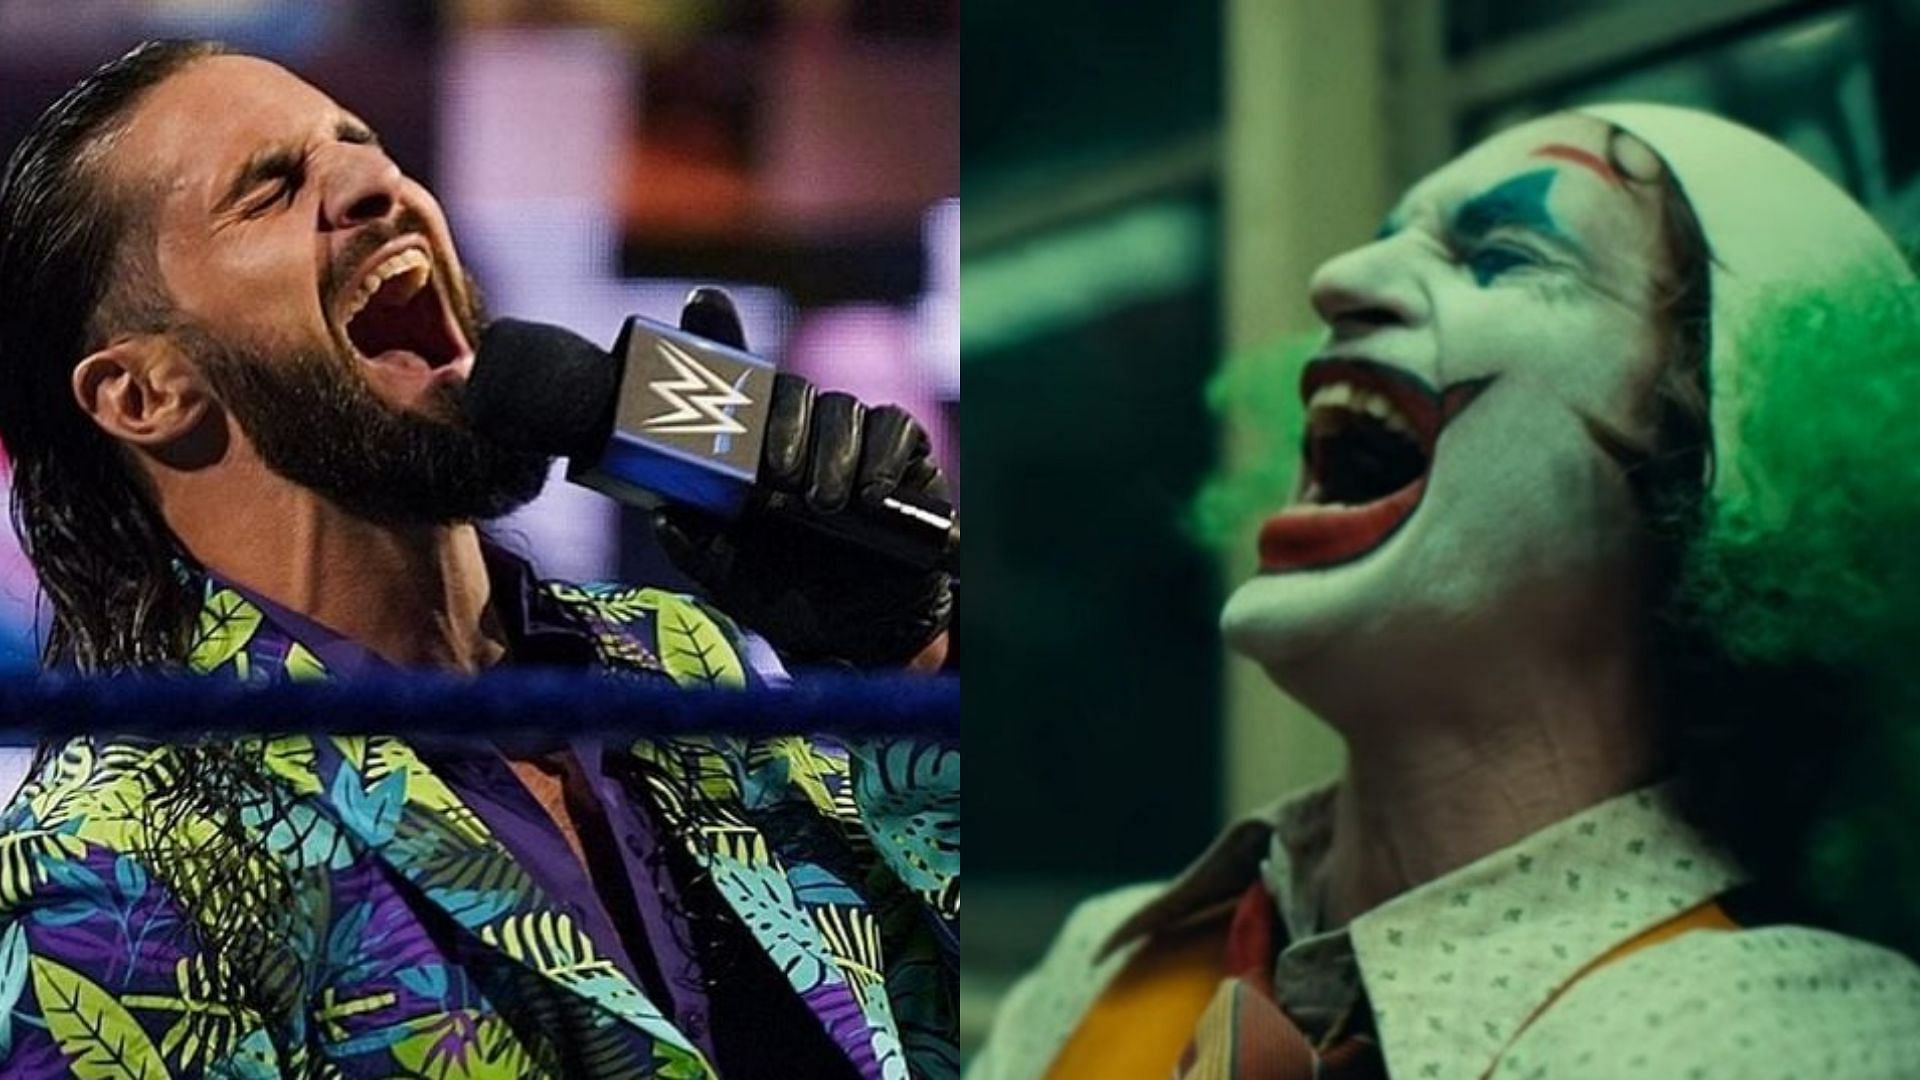 WWE Superstar Seth Rollins has portrayed a very Joker-like character on-screen